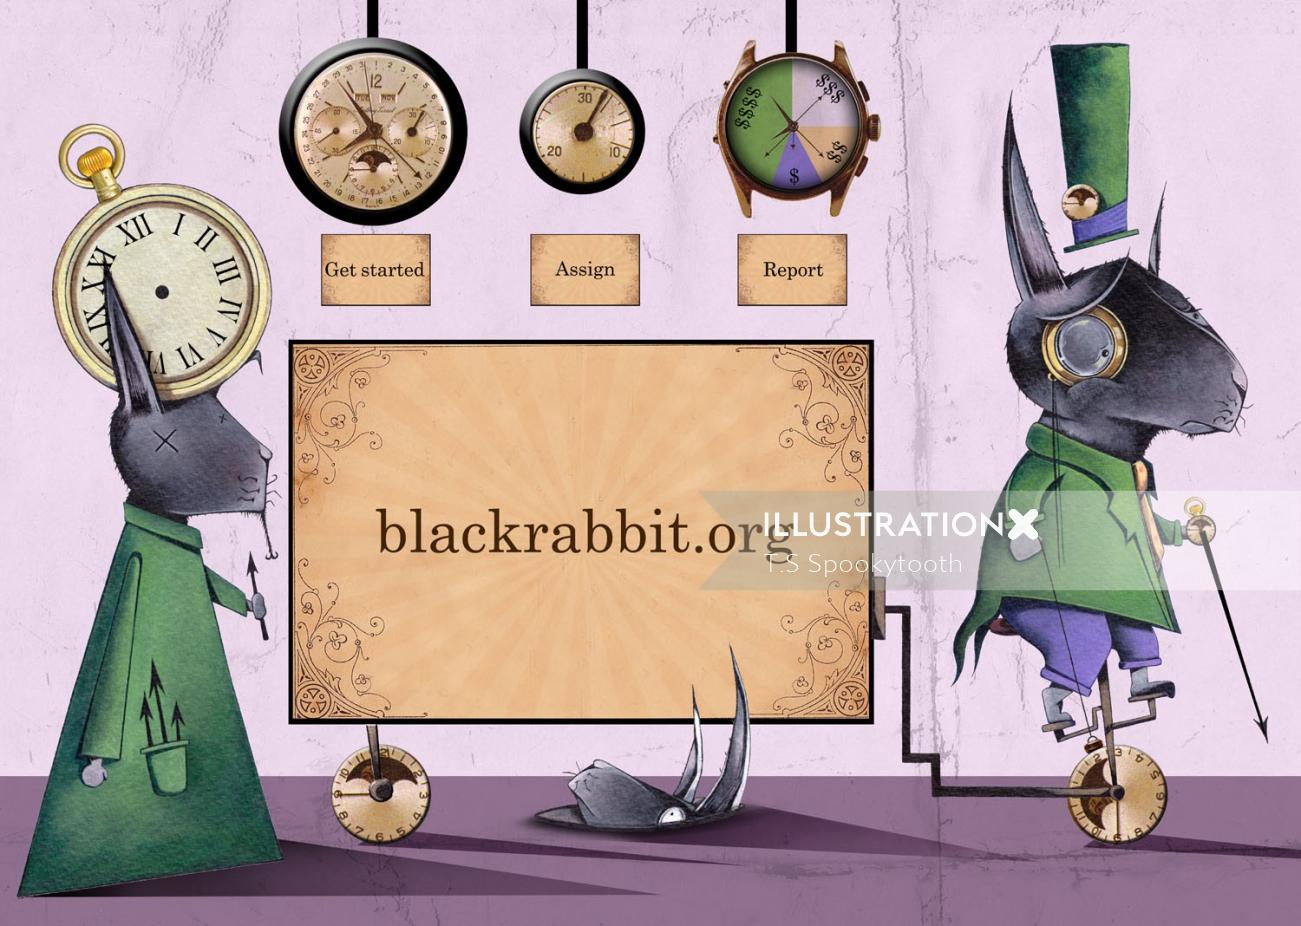 Blackrabbitsのウェブサイトのランディングページのイラスト